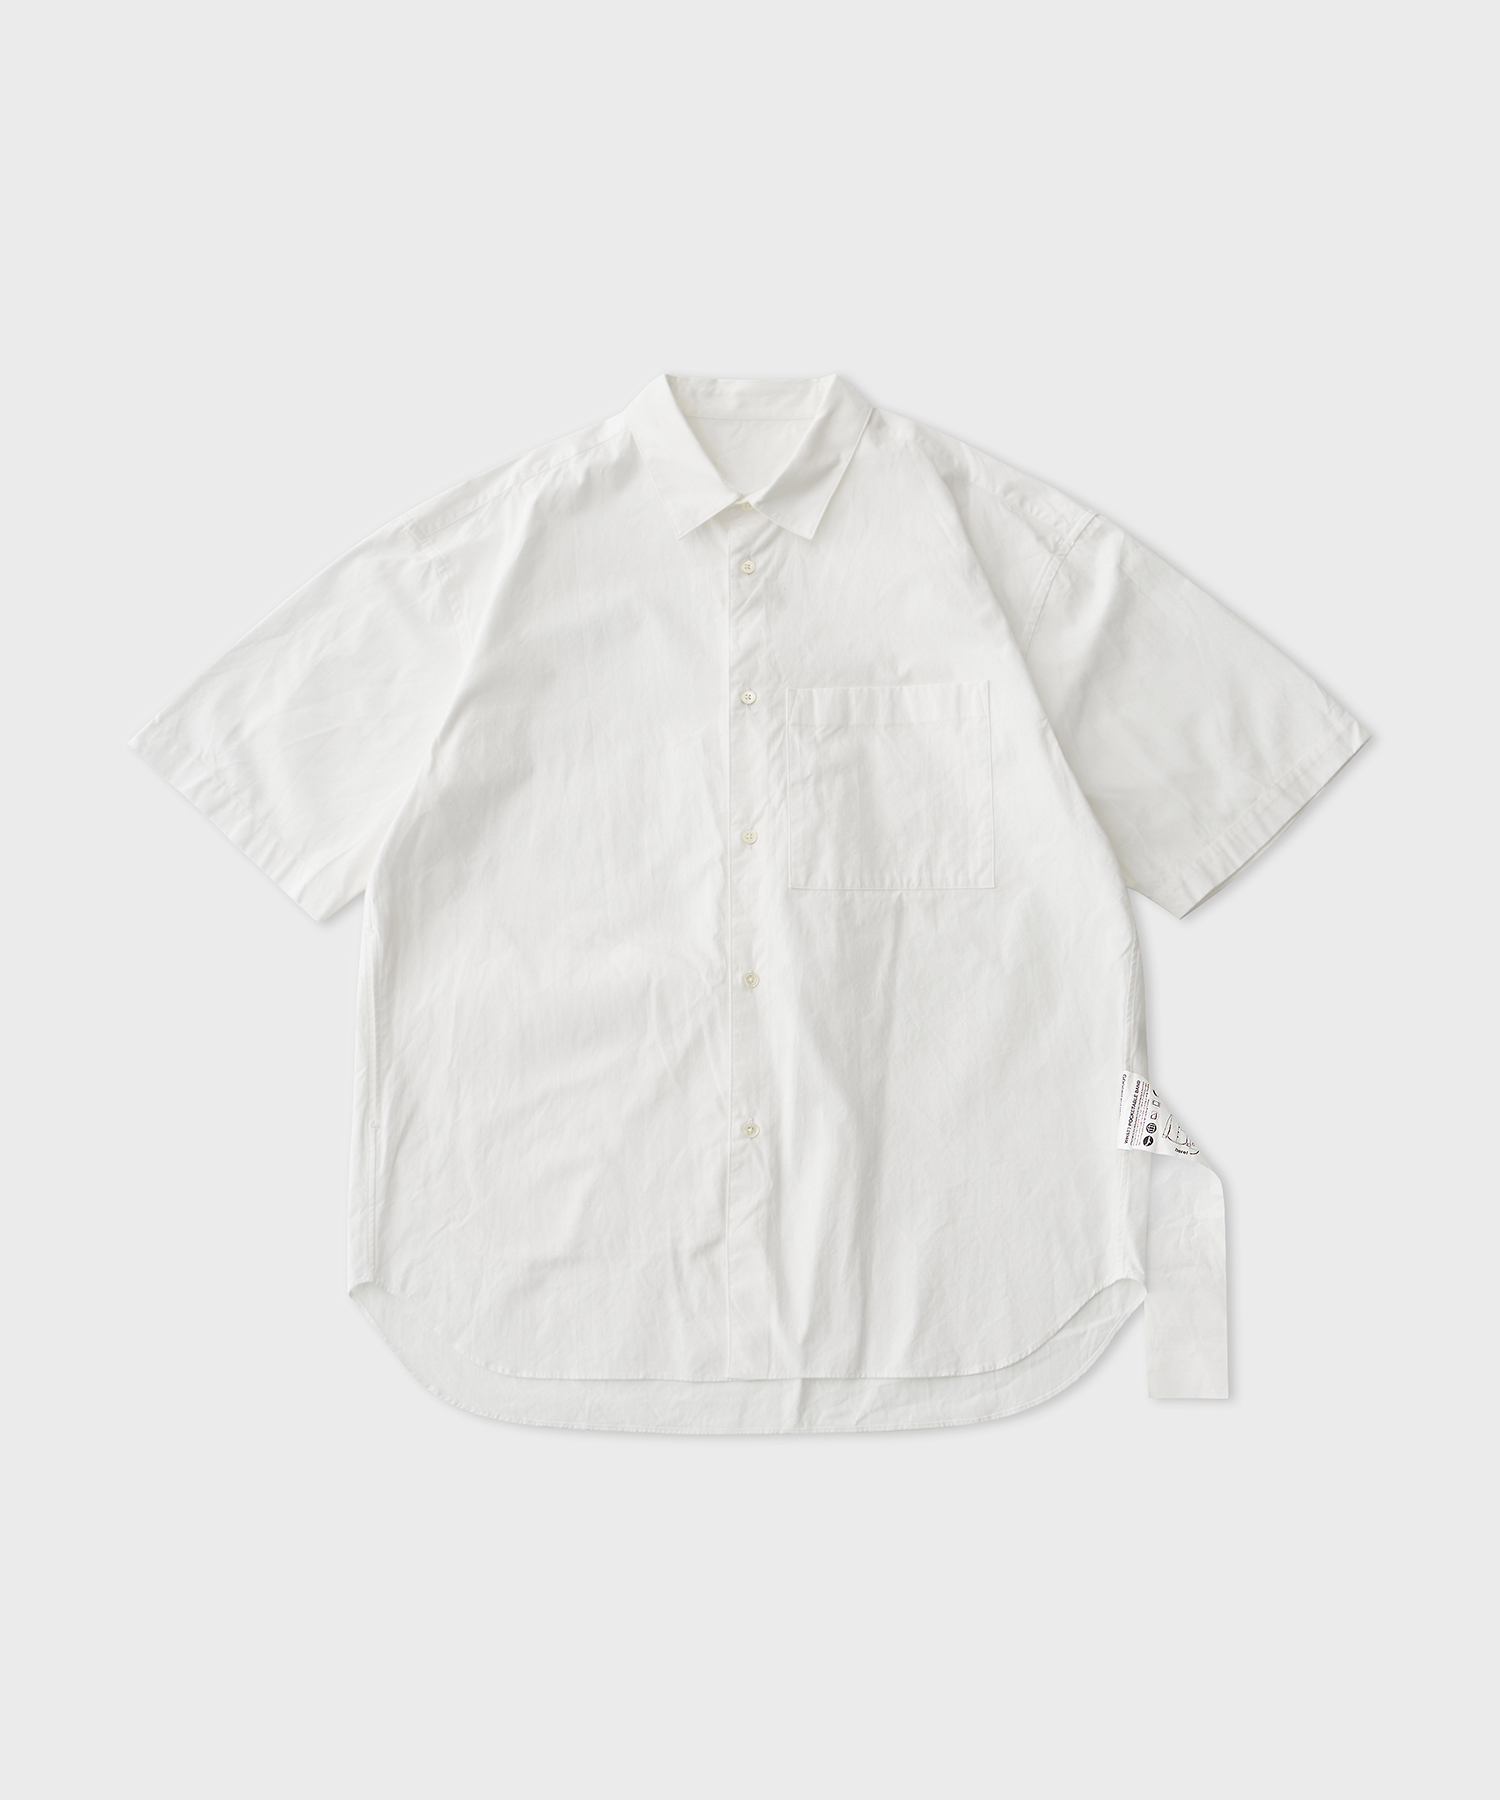 Jean Regular Collar S/S Shirt (White)